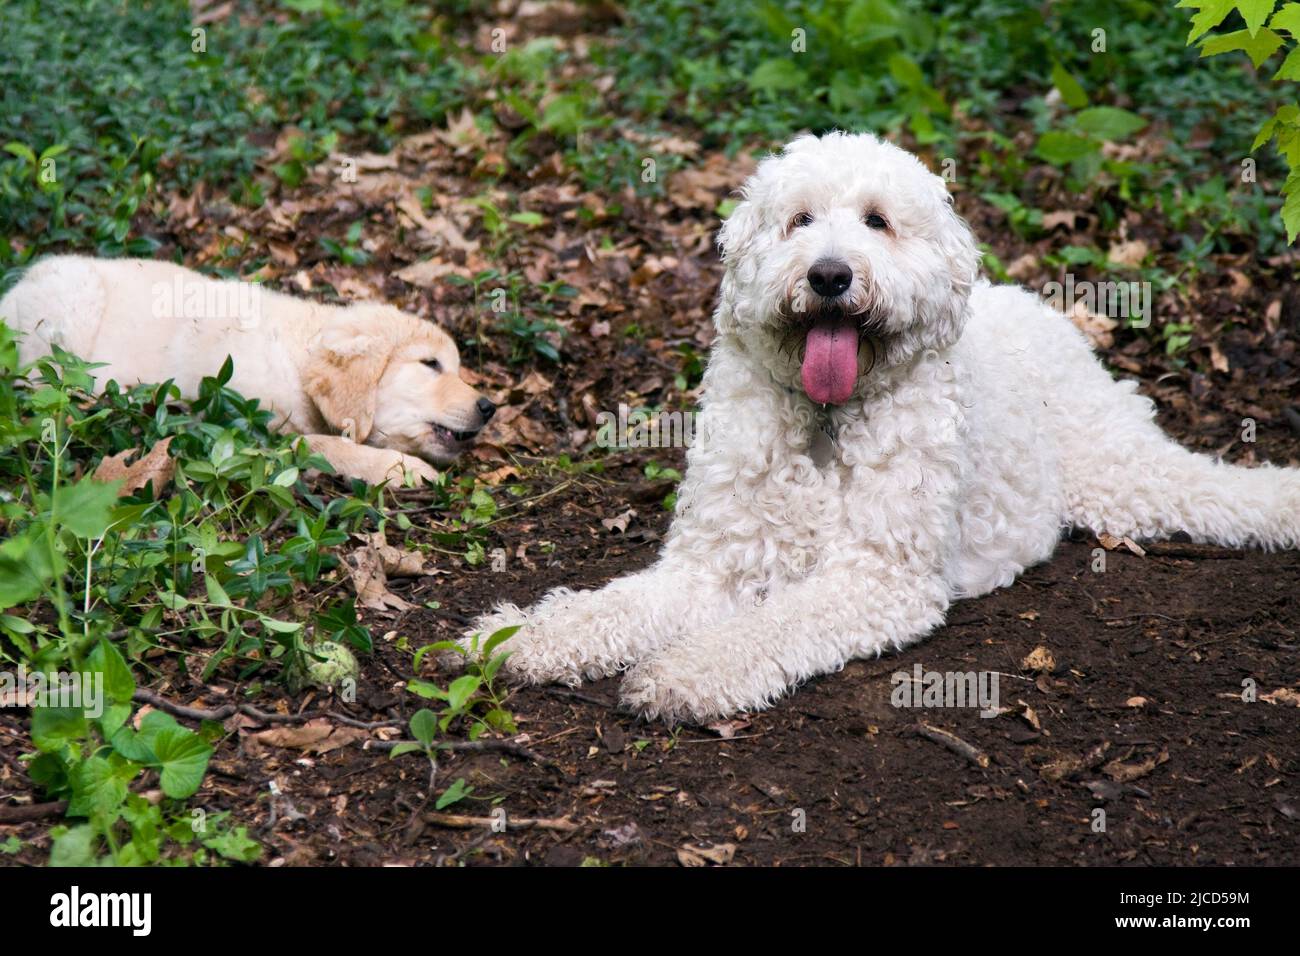 Golden Retriever Poodle mix dog, white fur, large, Golden Retriever puppy, beige, pets, cute, animal, canine Stock Photo